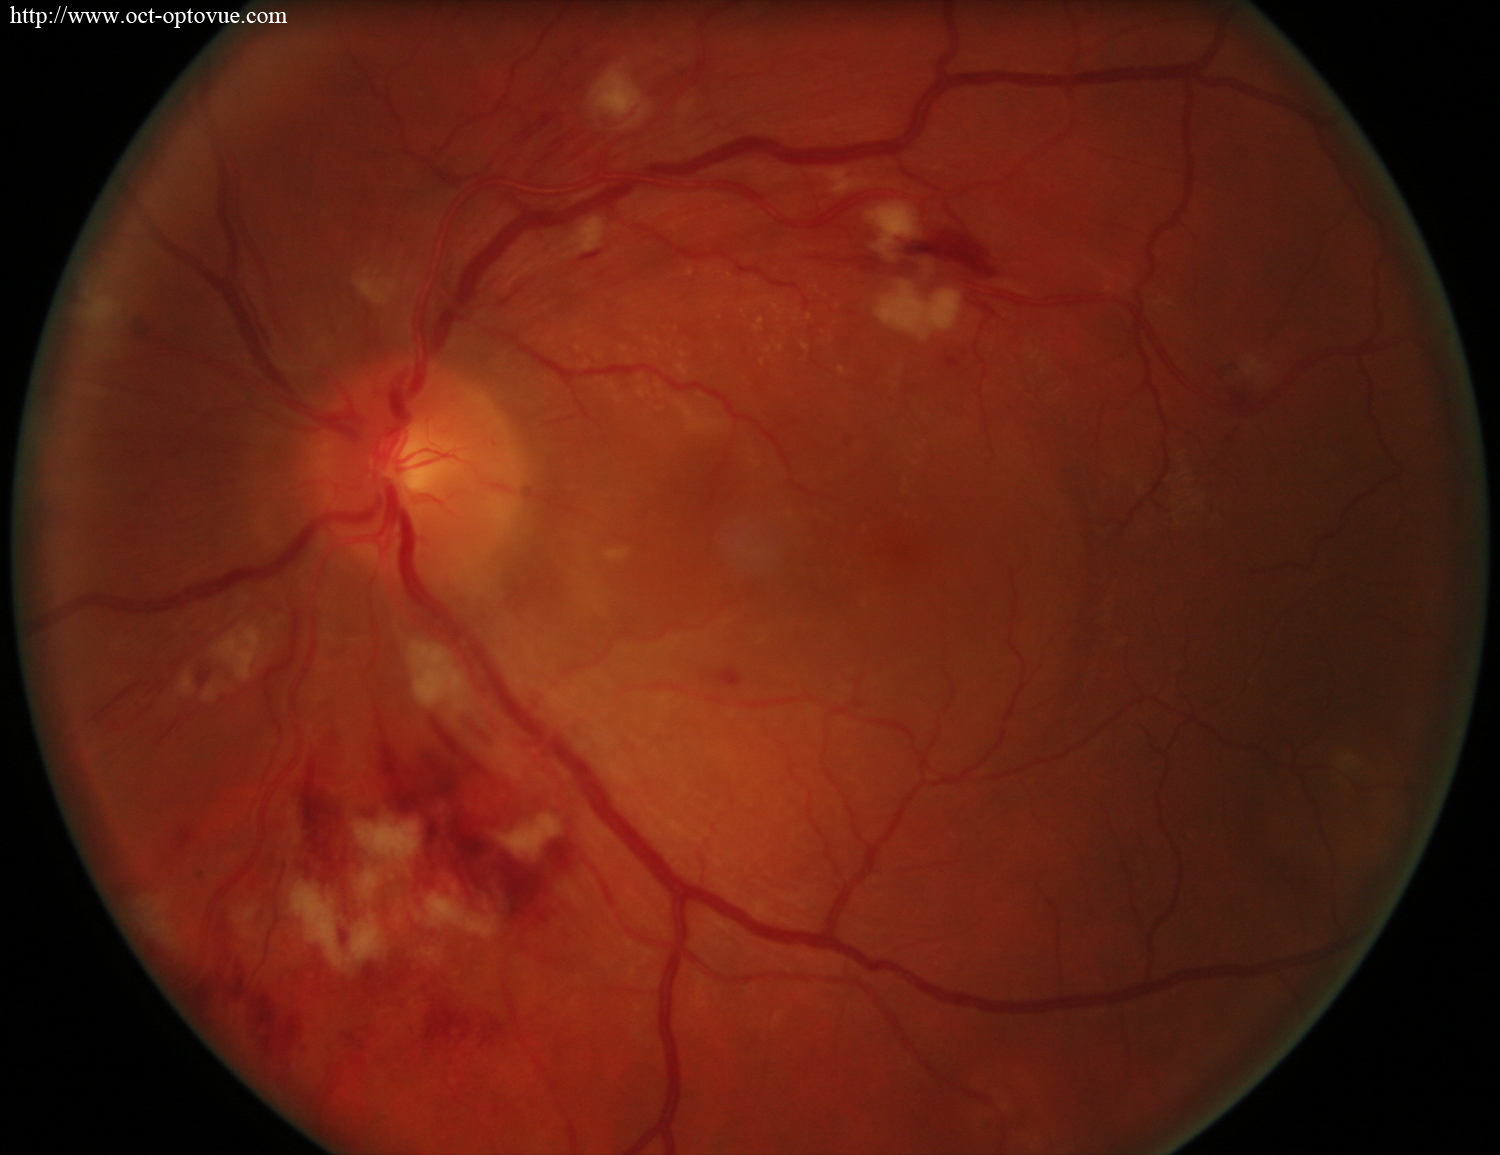 hypertensive retinopathy left